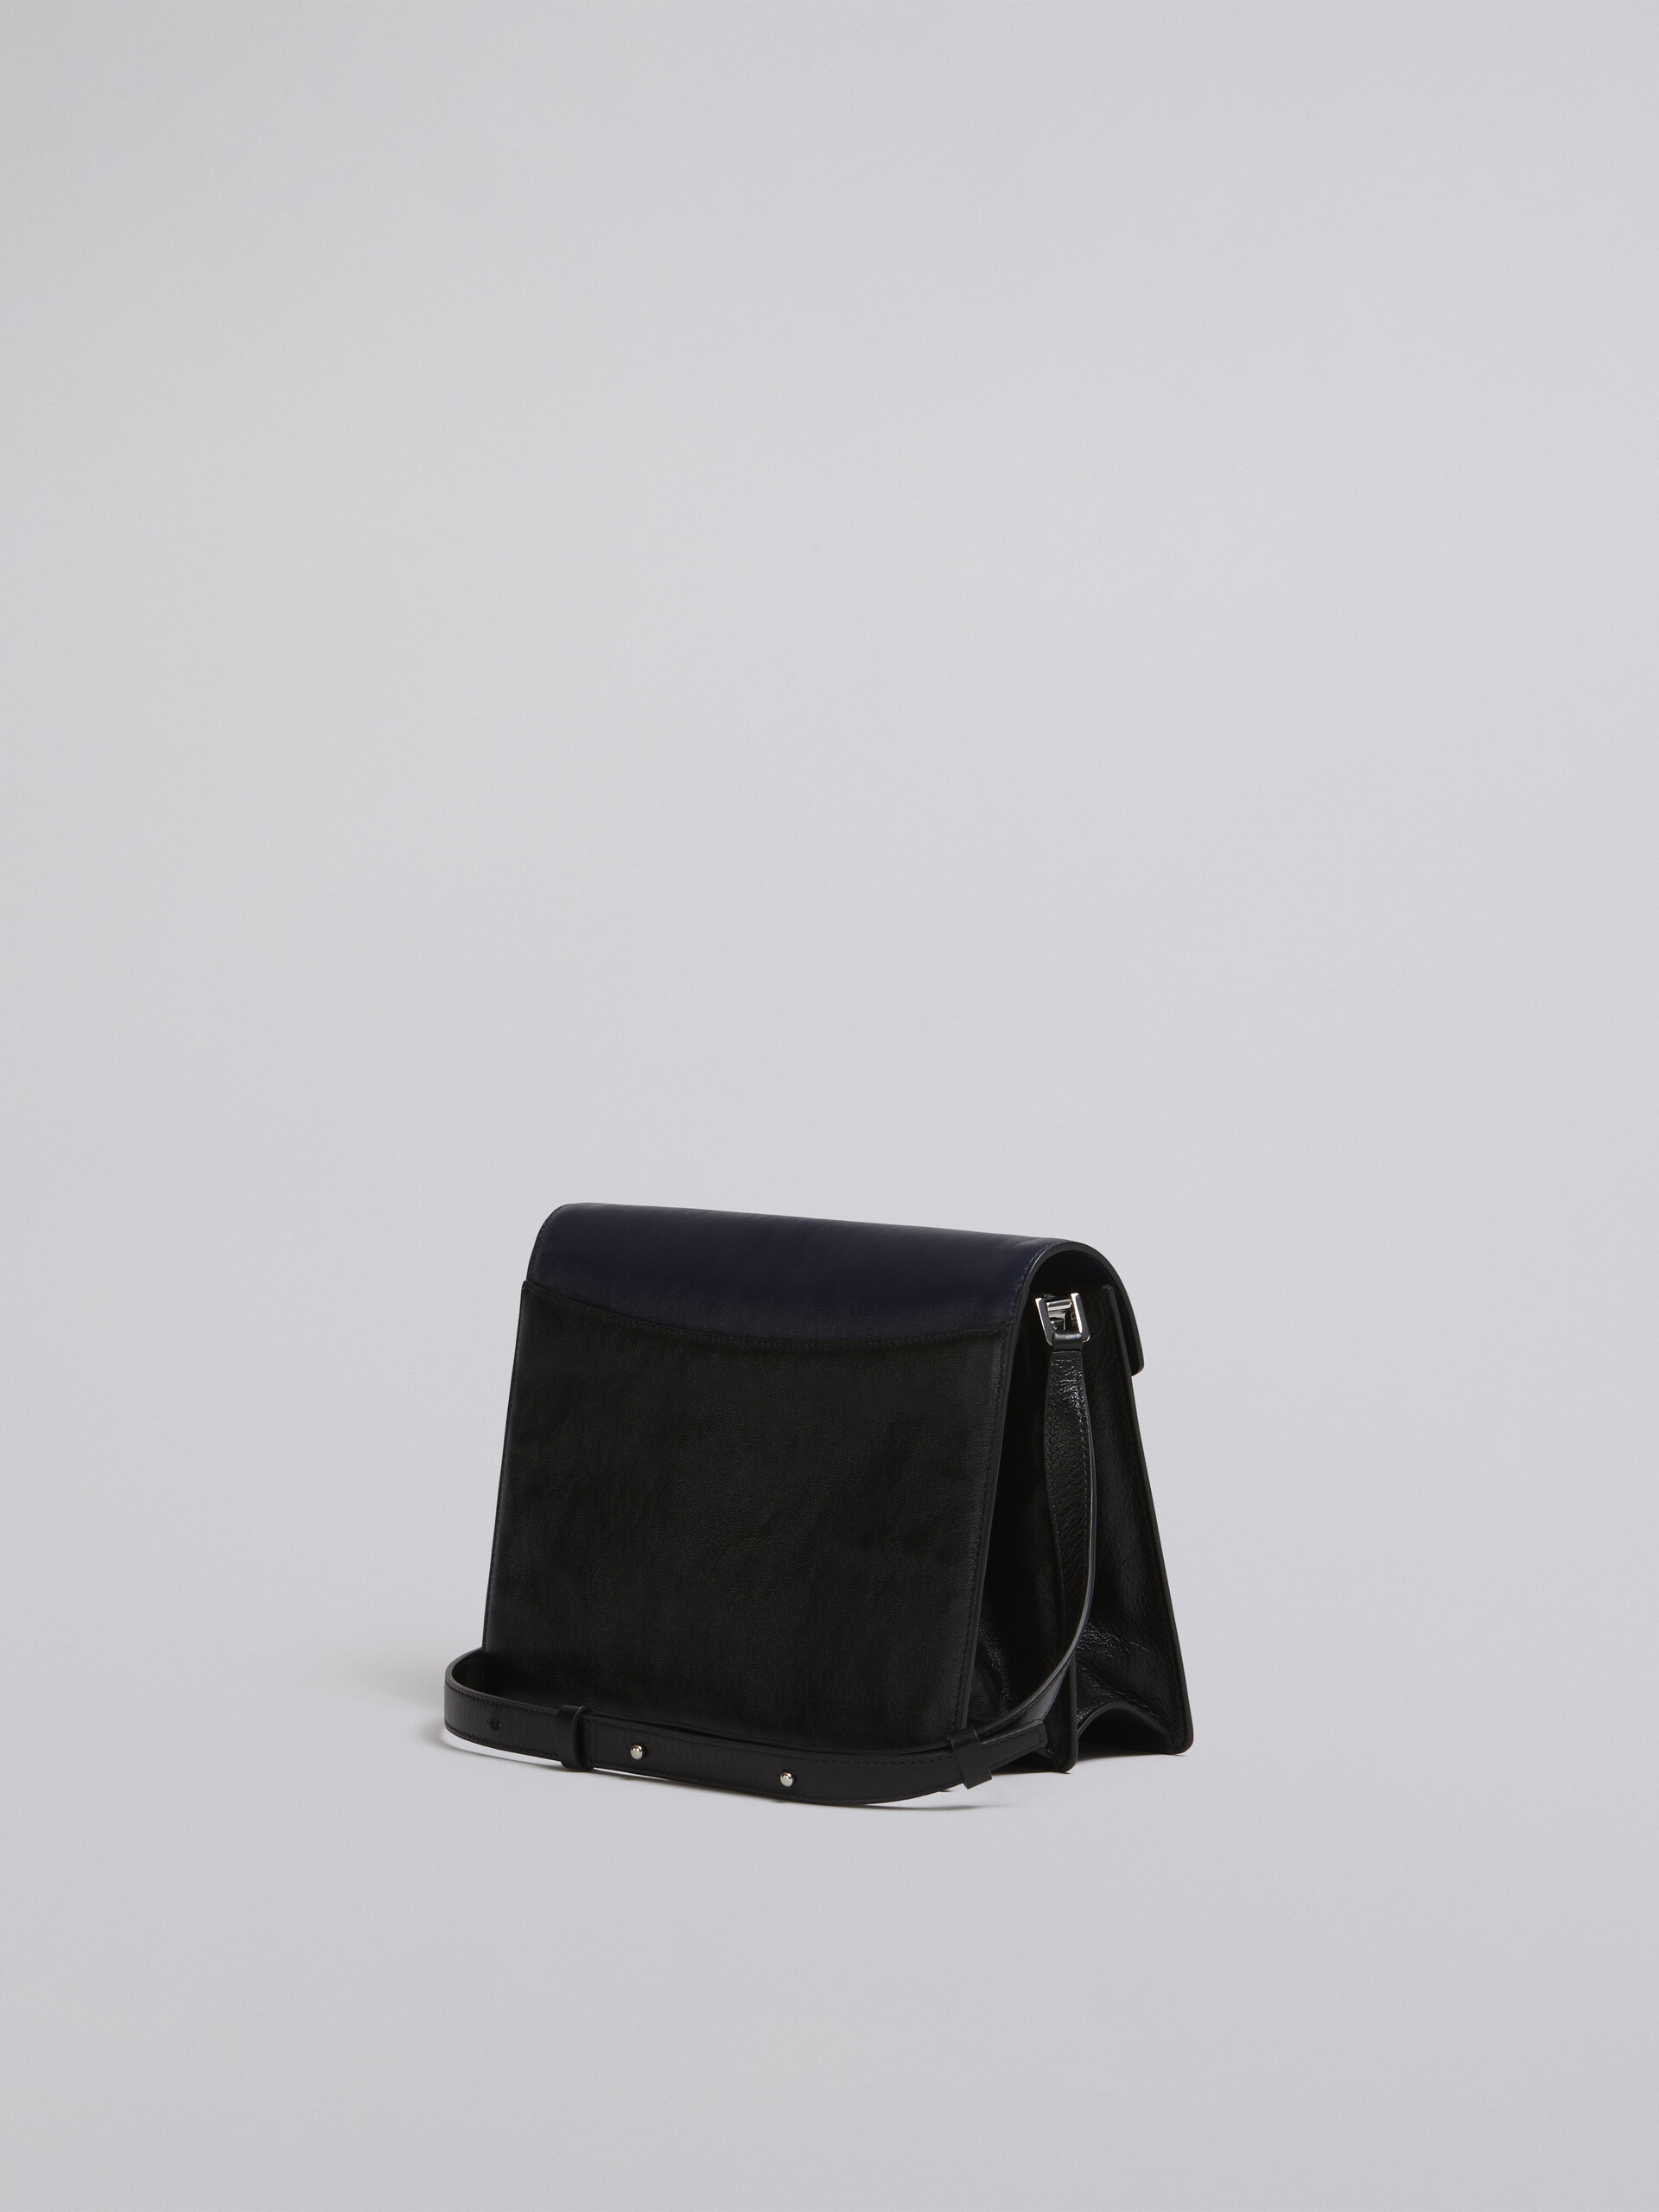 Trunk Soft Bag E/W in black leather